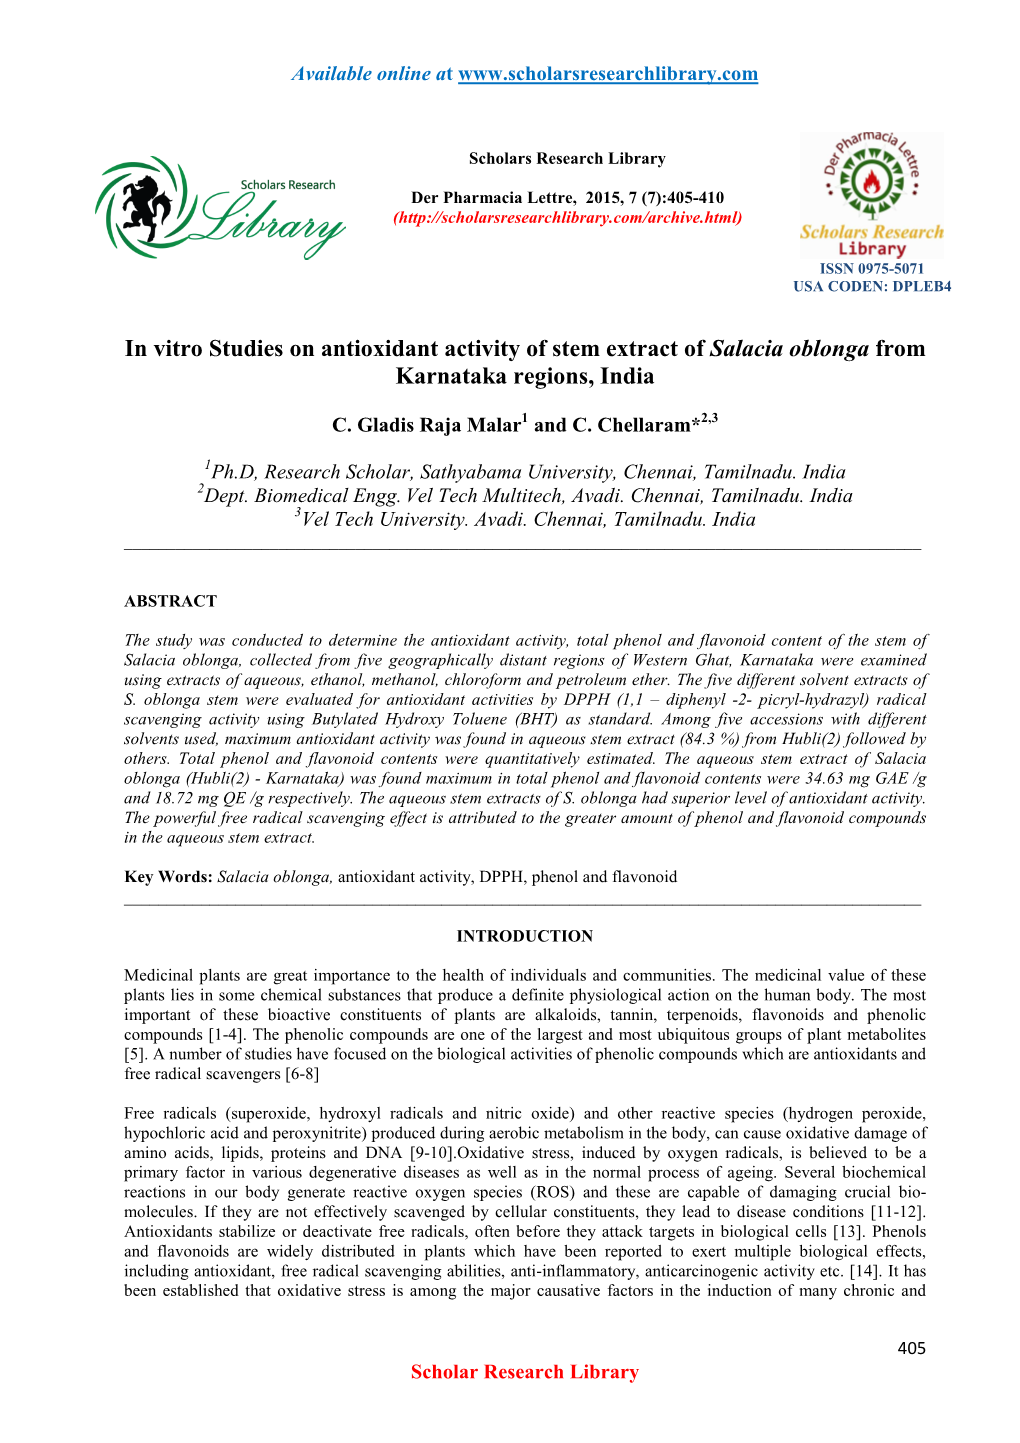 In Vitro Studies on Antioxidant Activity of Stem Extract of Salacia Oblonga from Karnataka Regions, India